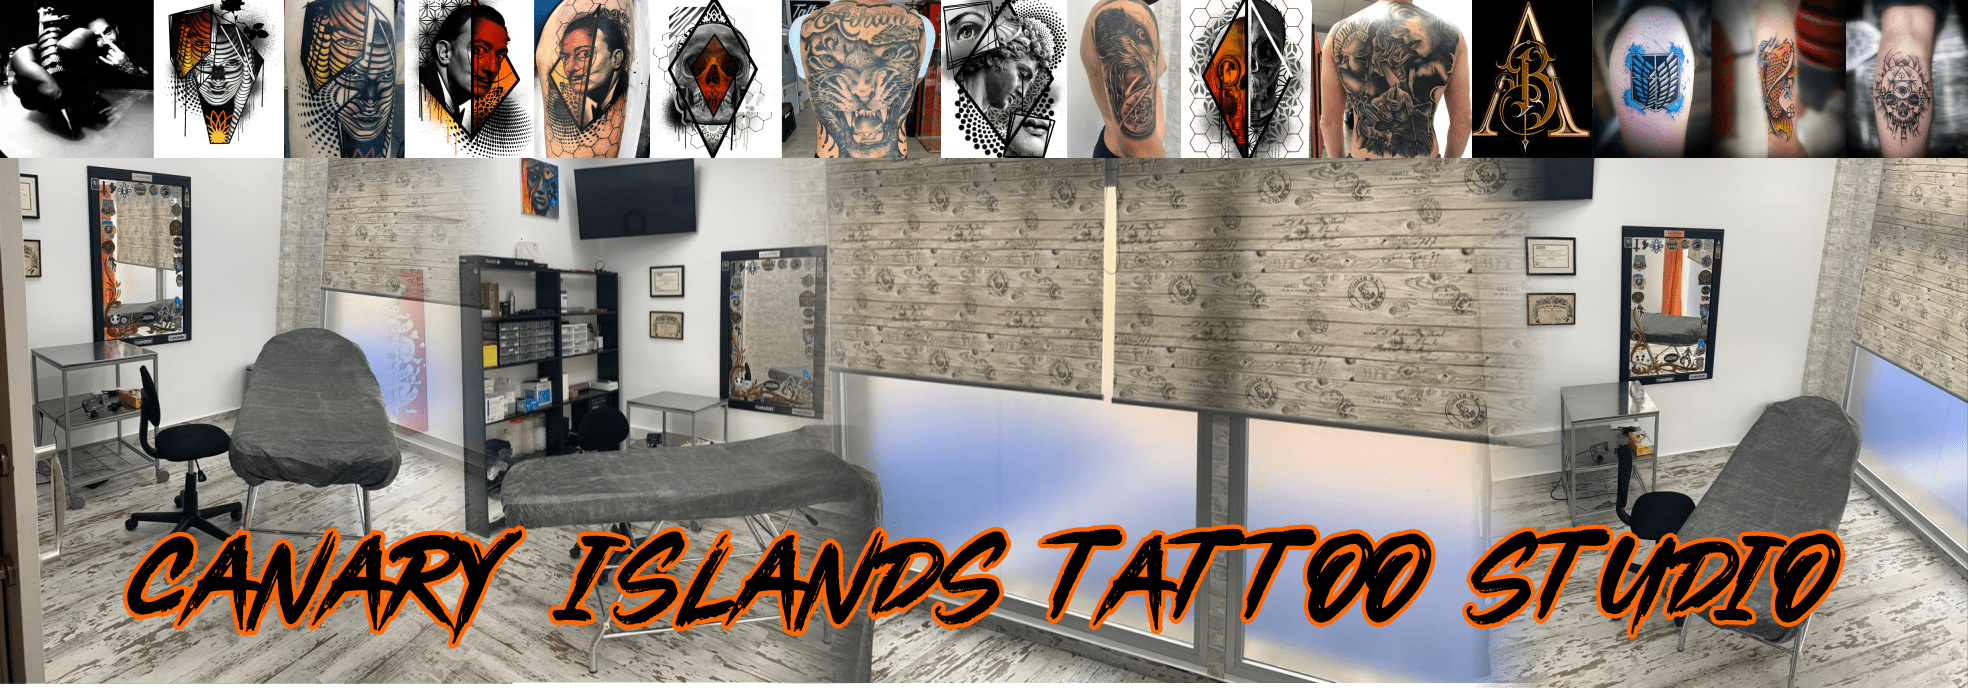 tattoo studio